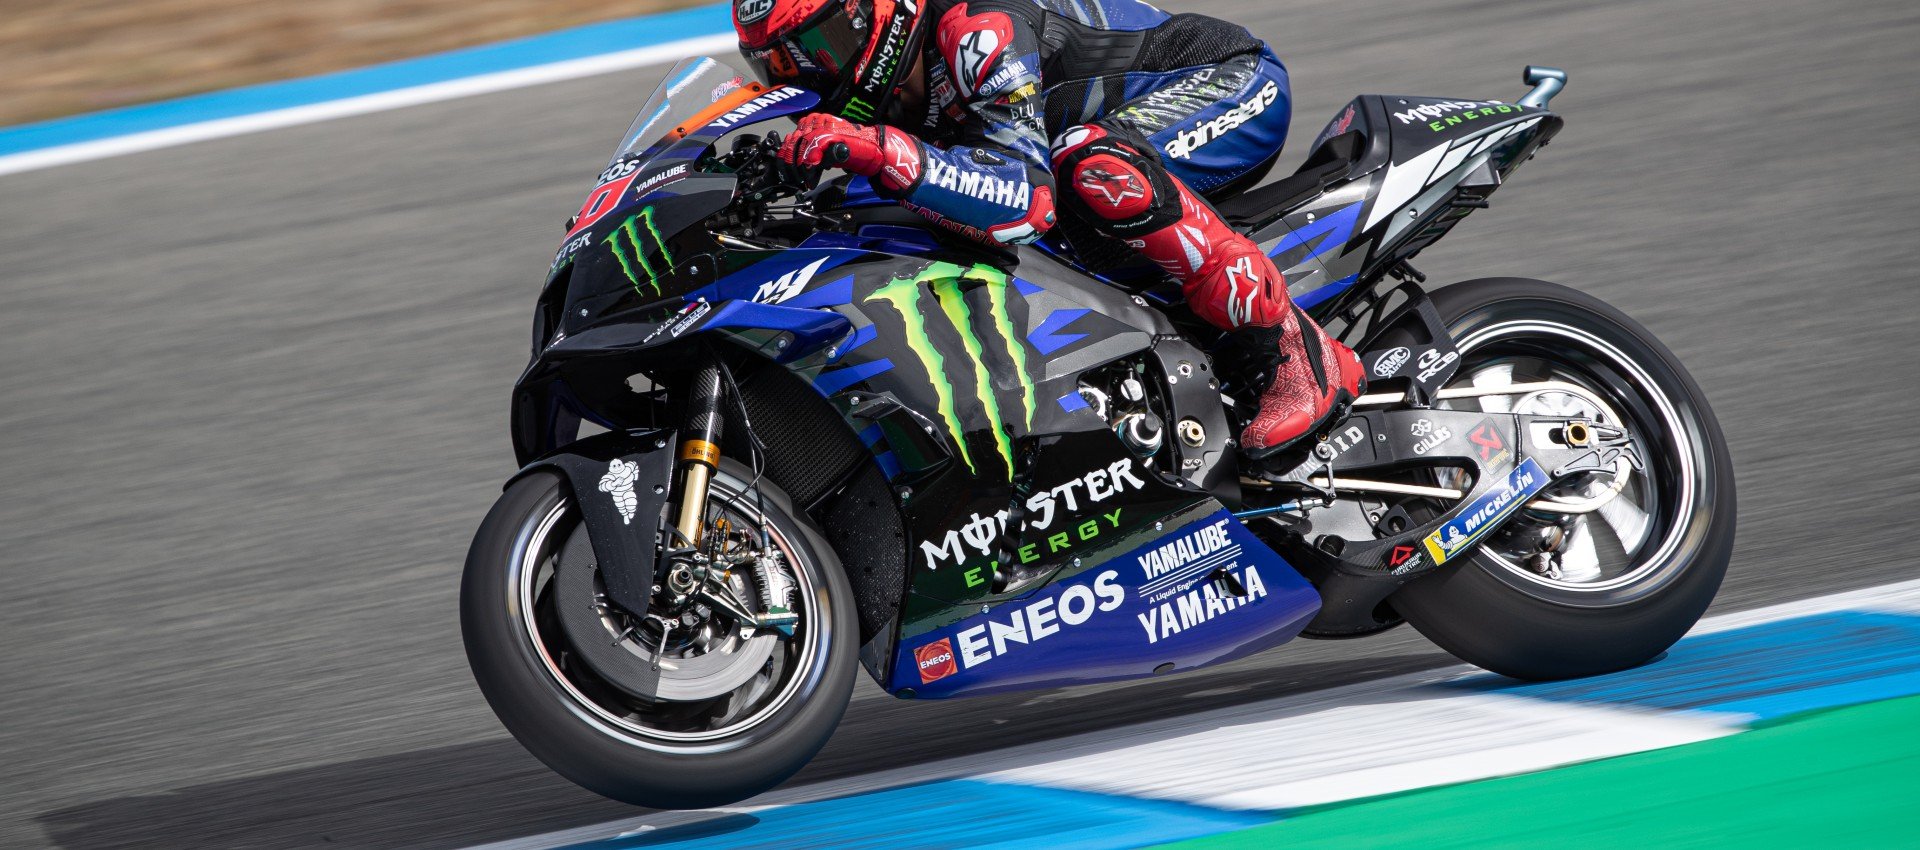 BMC Air Filter è sponsor e fornitore ufficiale del team Monster Energy Yamaha MotoGP